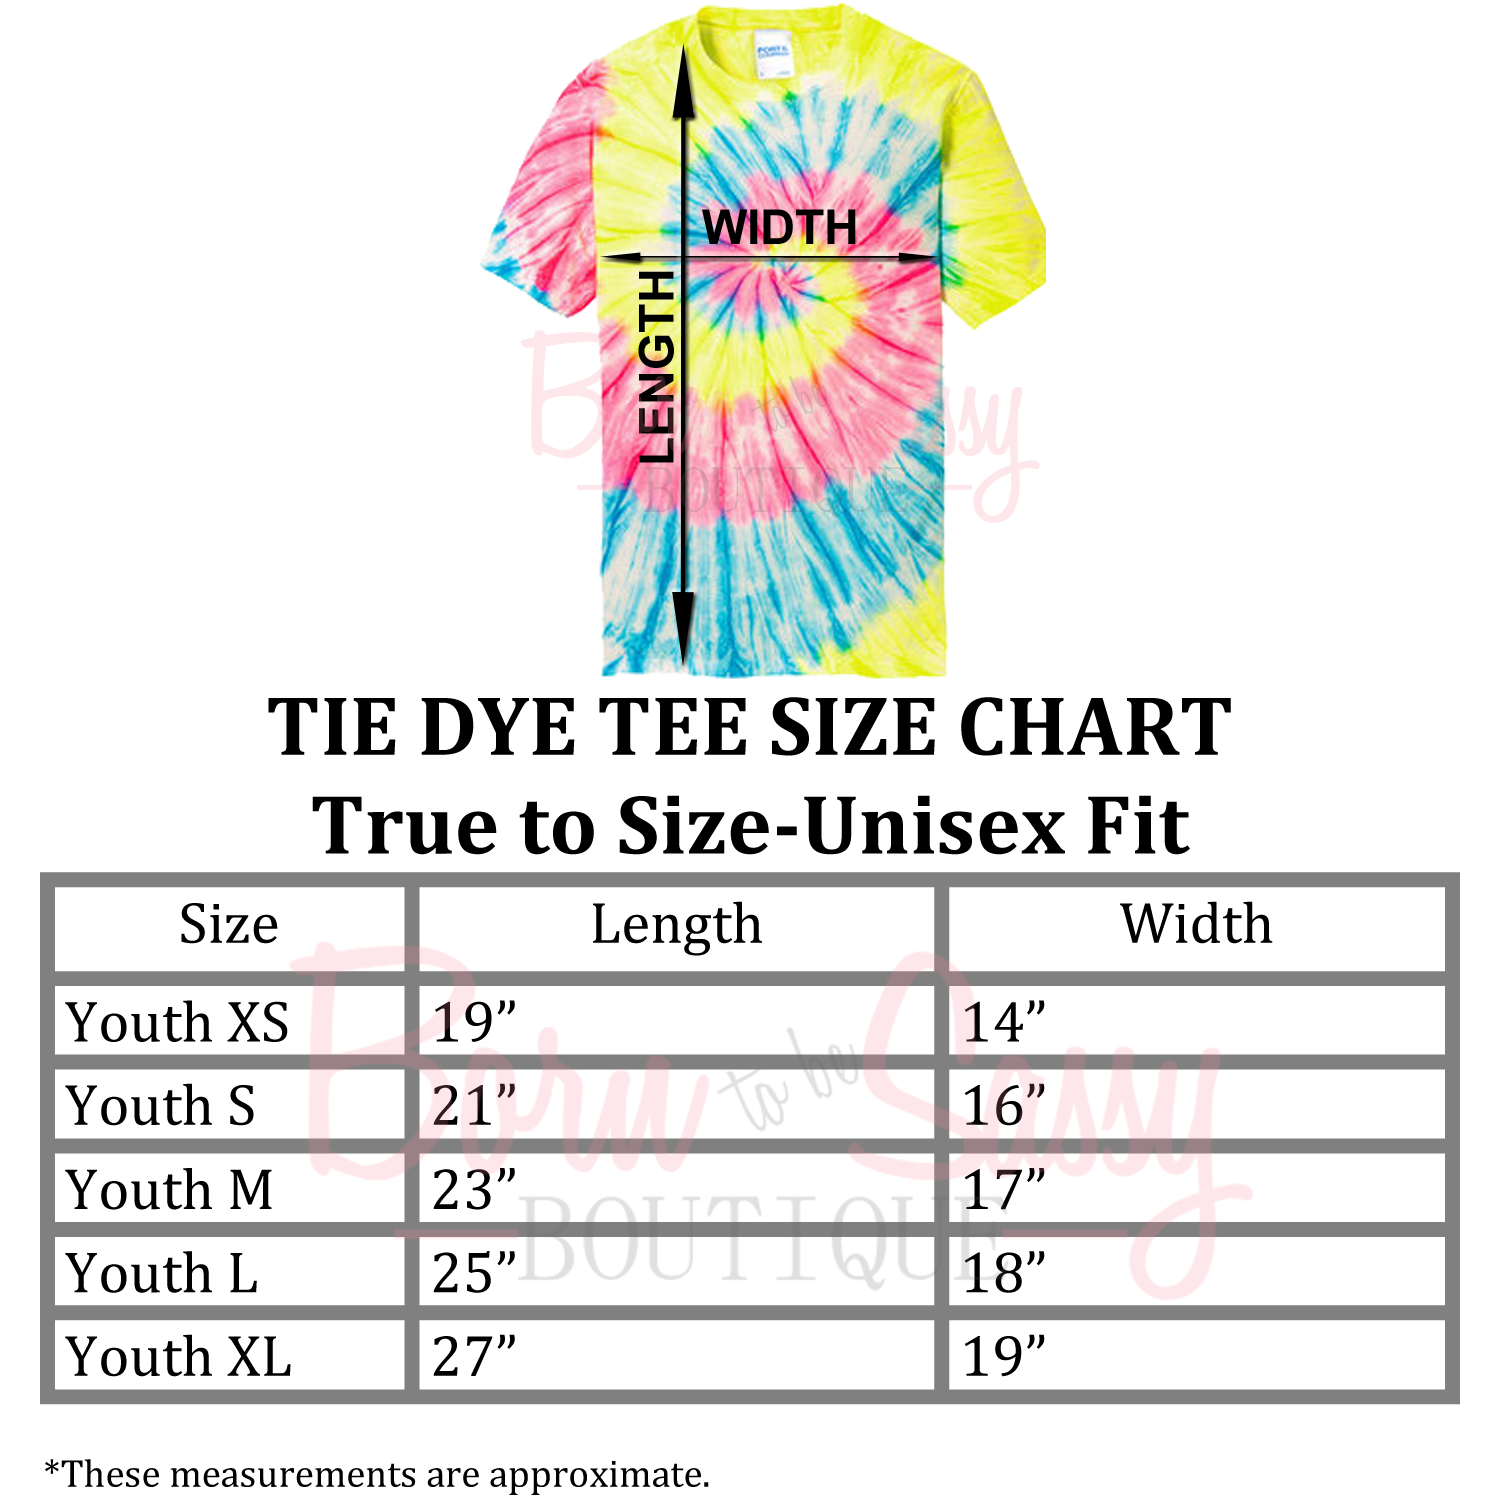 Monogram Tie Dye Initial Letter U Kids T-Shirt for Sale by Lartheviking